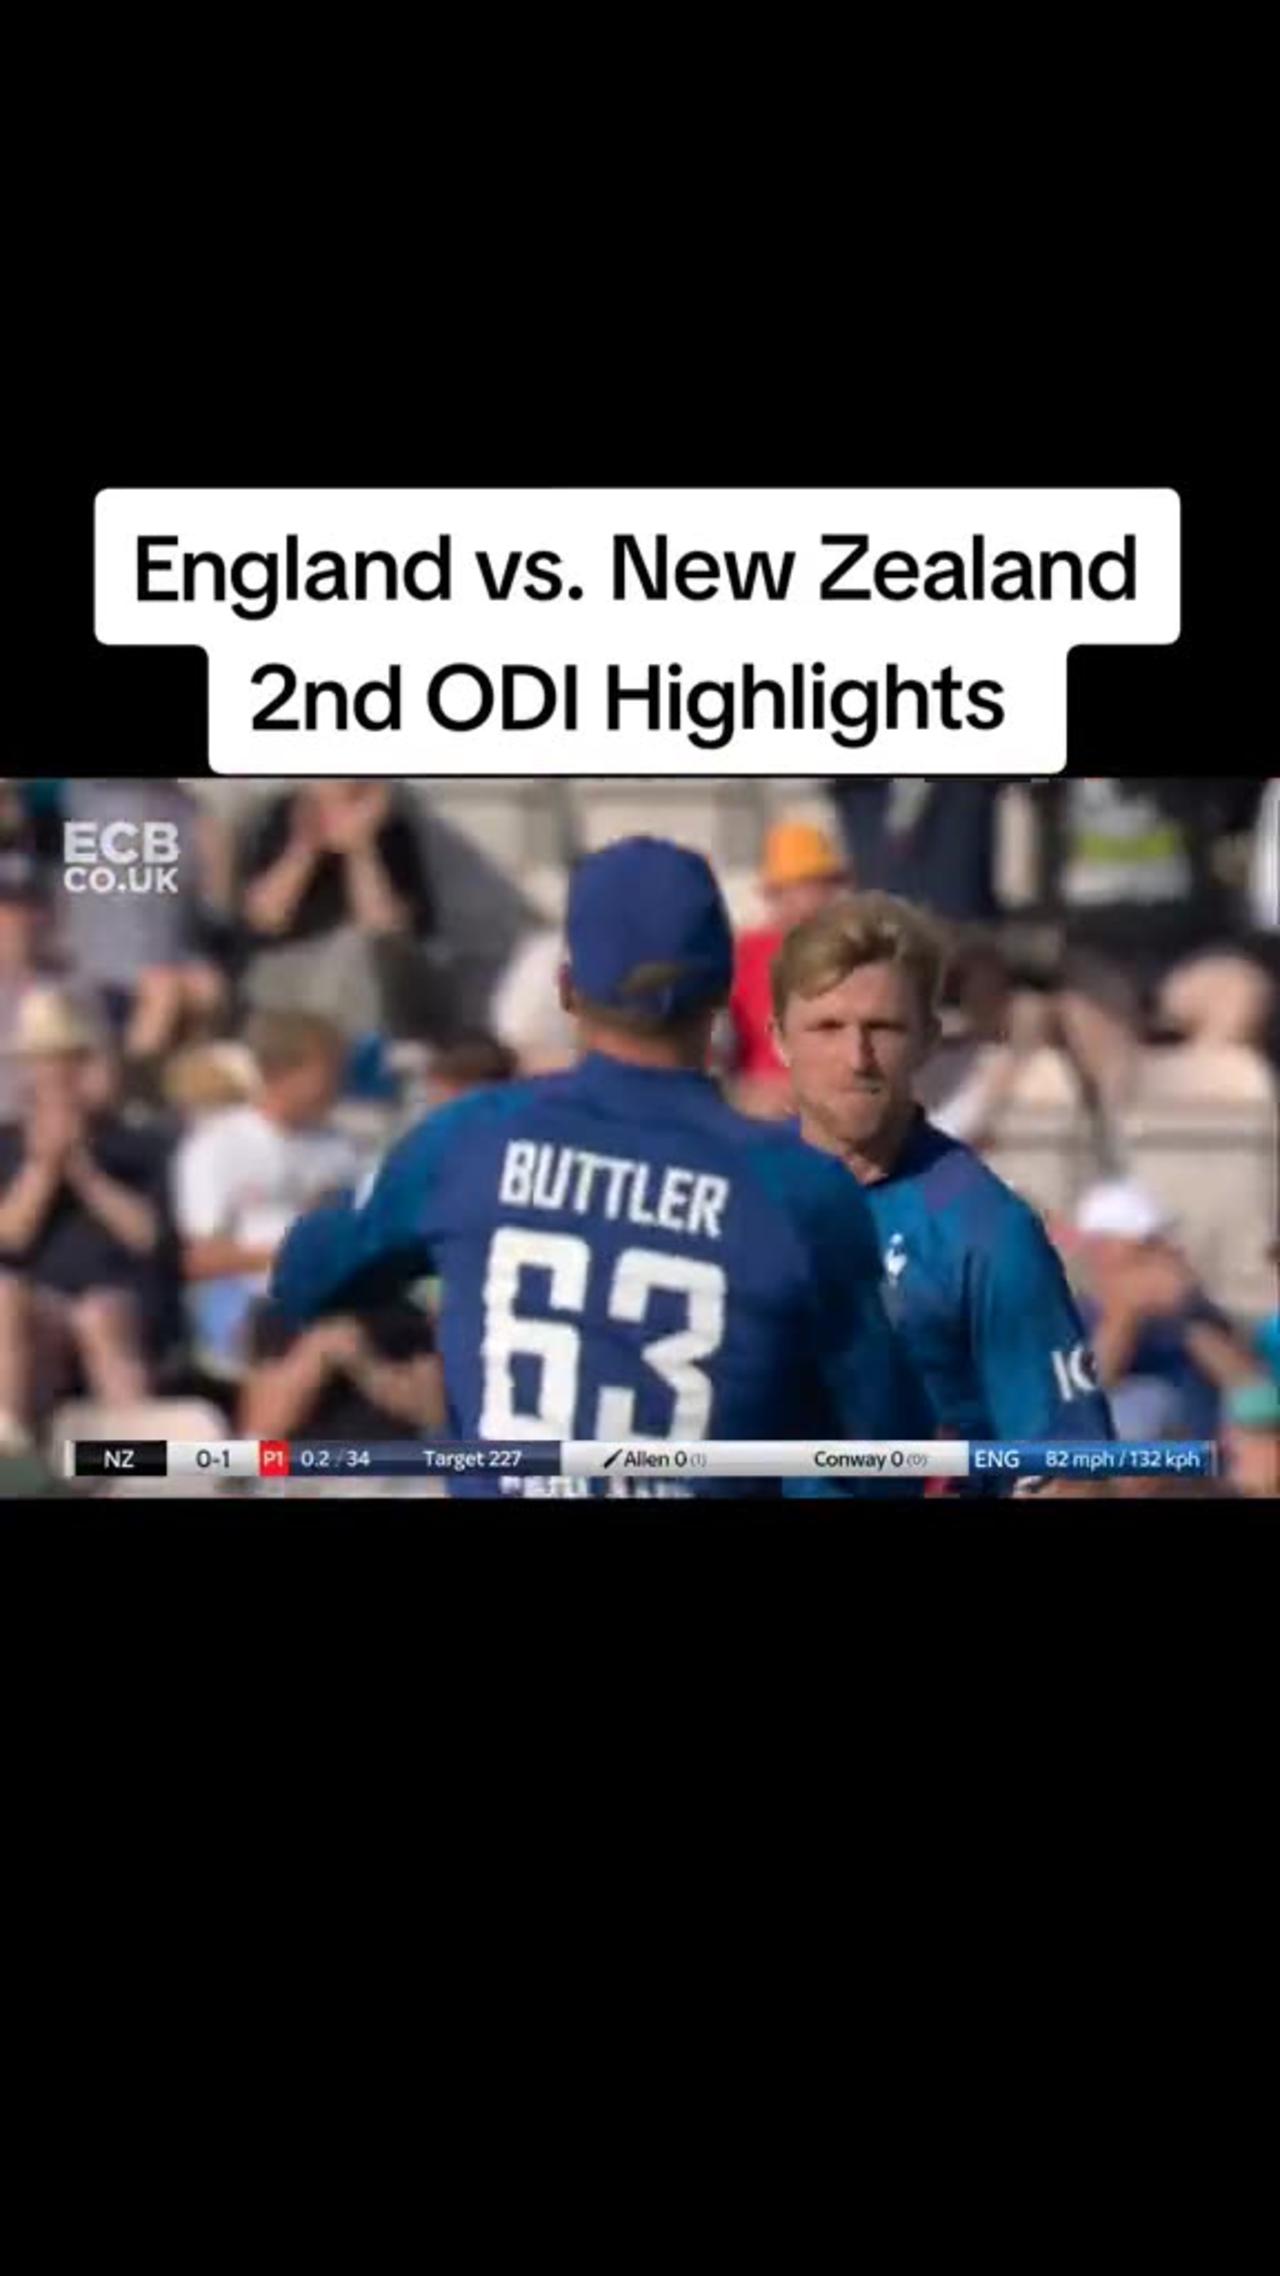 England vs new Zealand 2ODI HIGHLIGHTS